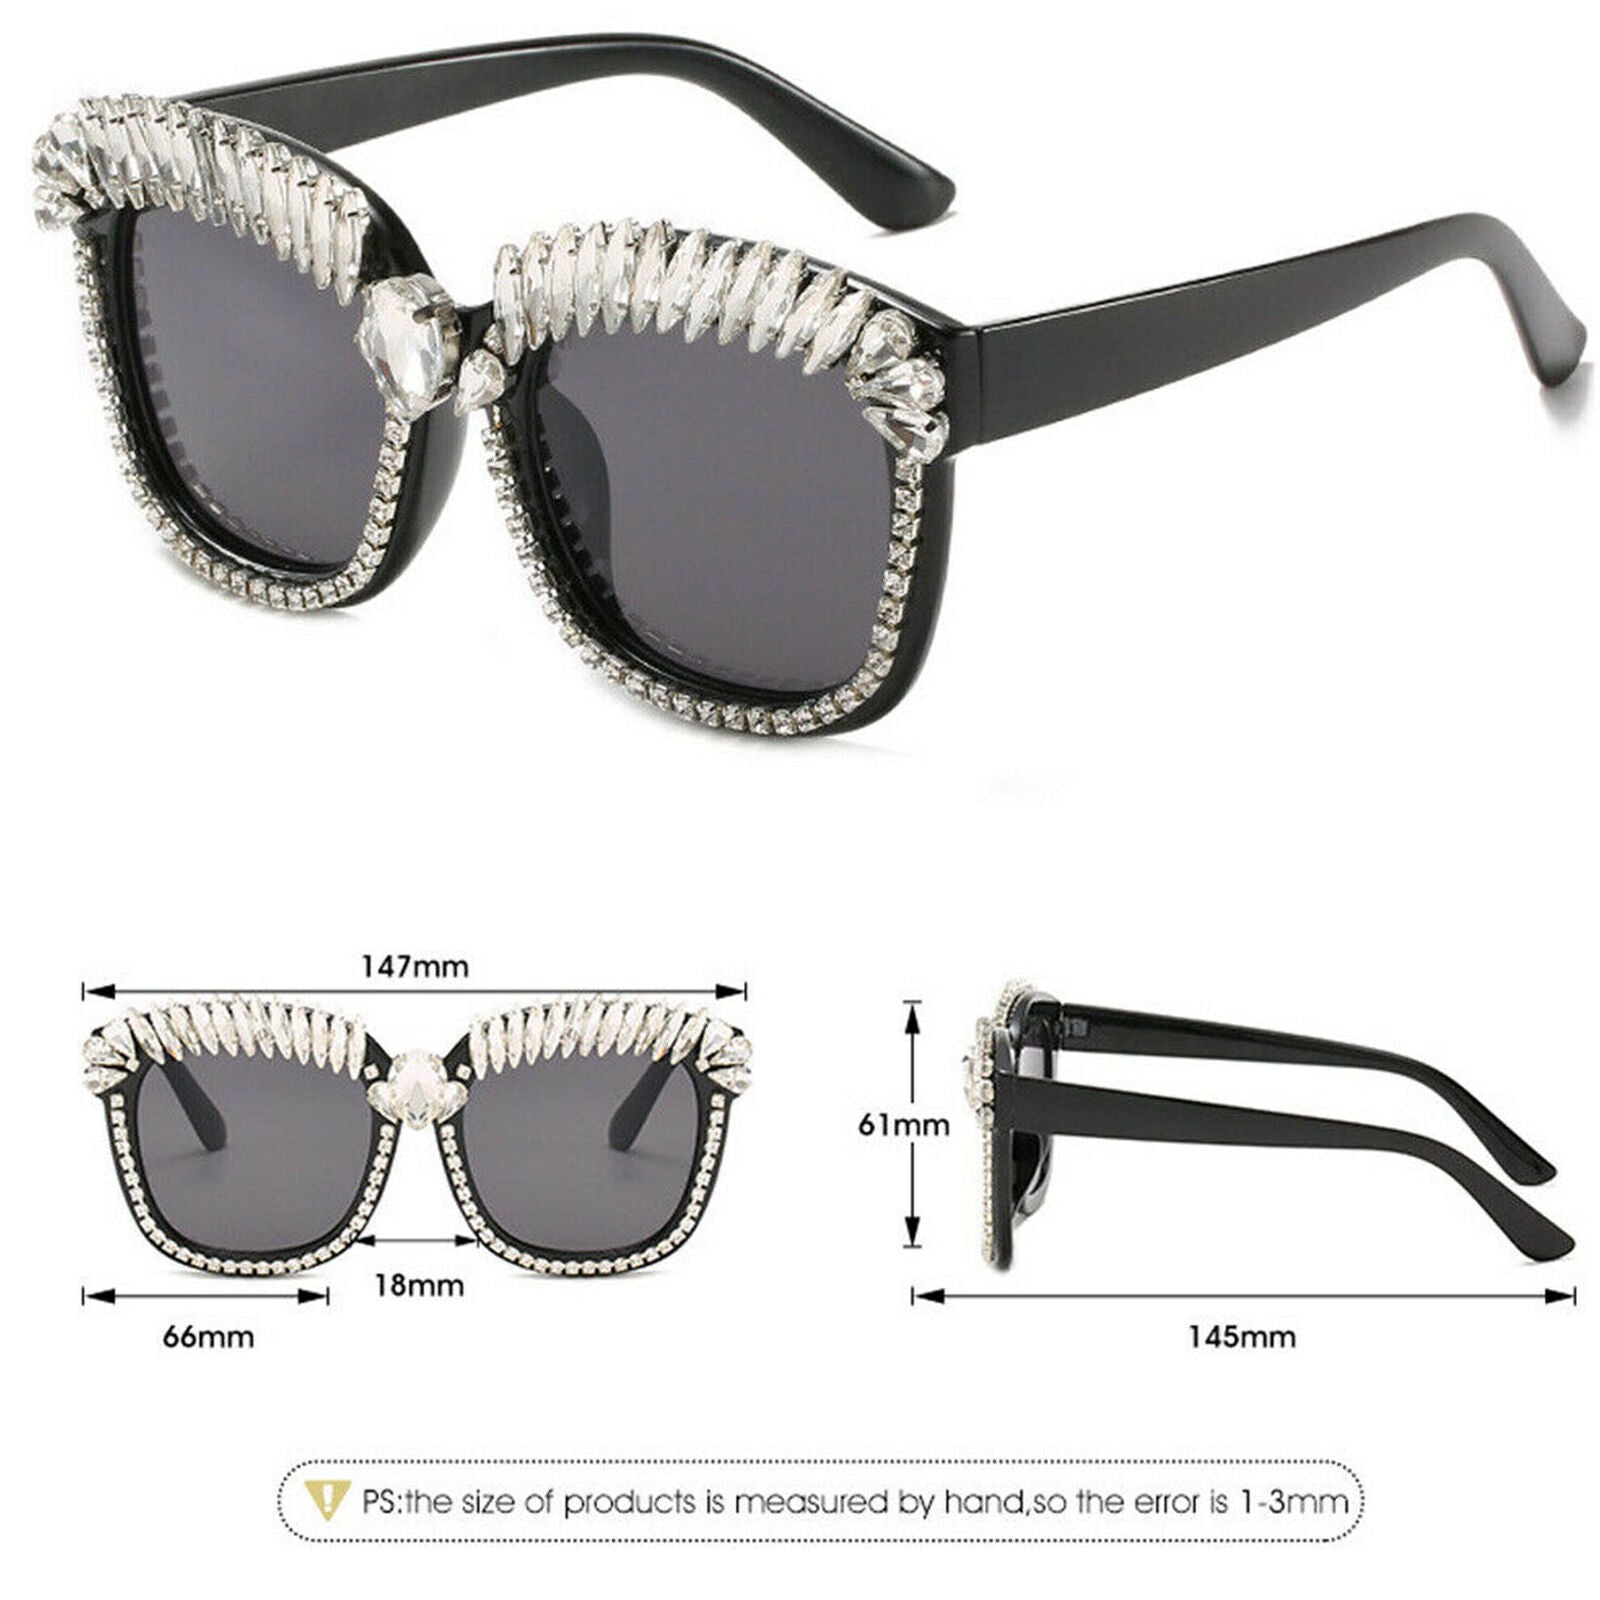 Hand-made Luxury Rhinestone Sunglasses Women Fashion Shades Party Eyewear UV400